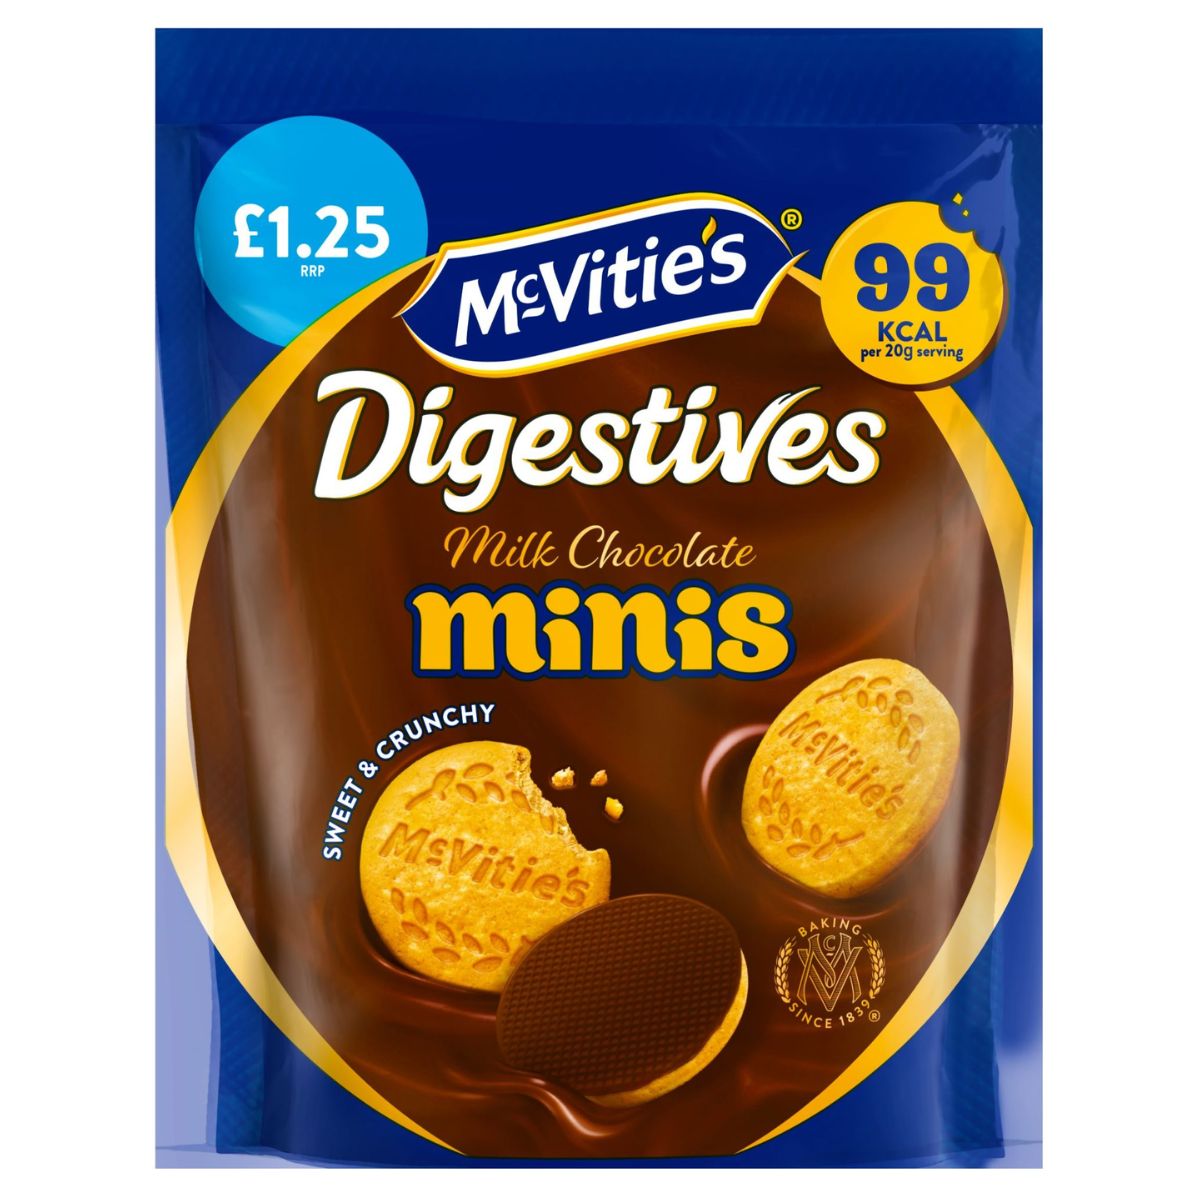 A bag of Mcvities - Digestive Milk Chocolate Minis - 80g.